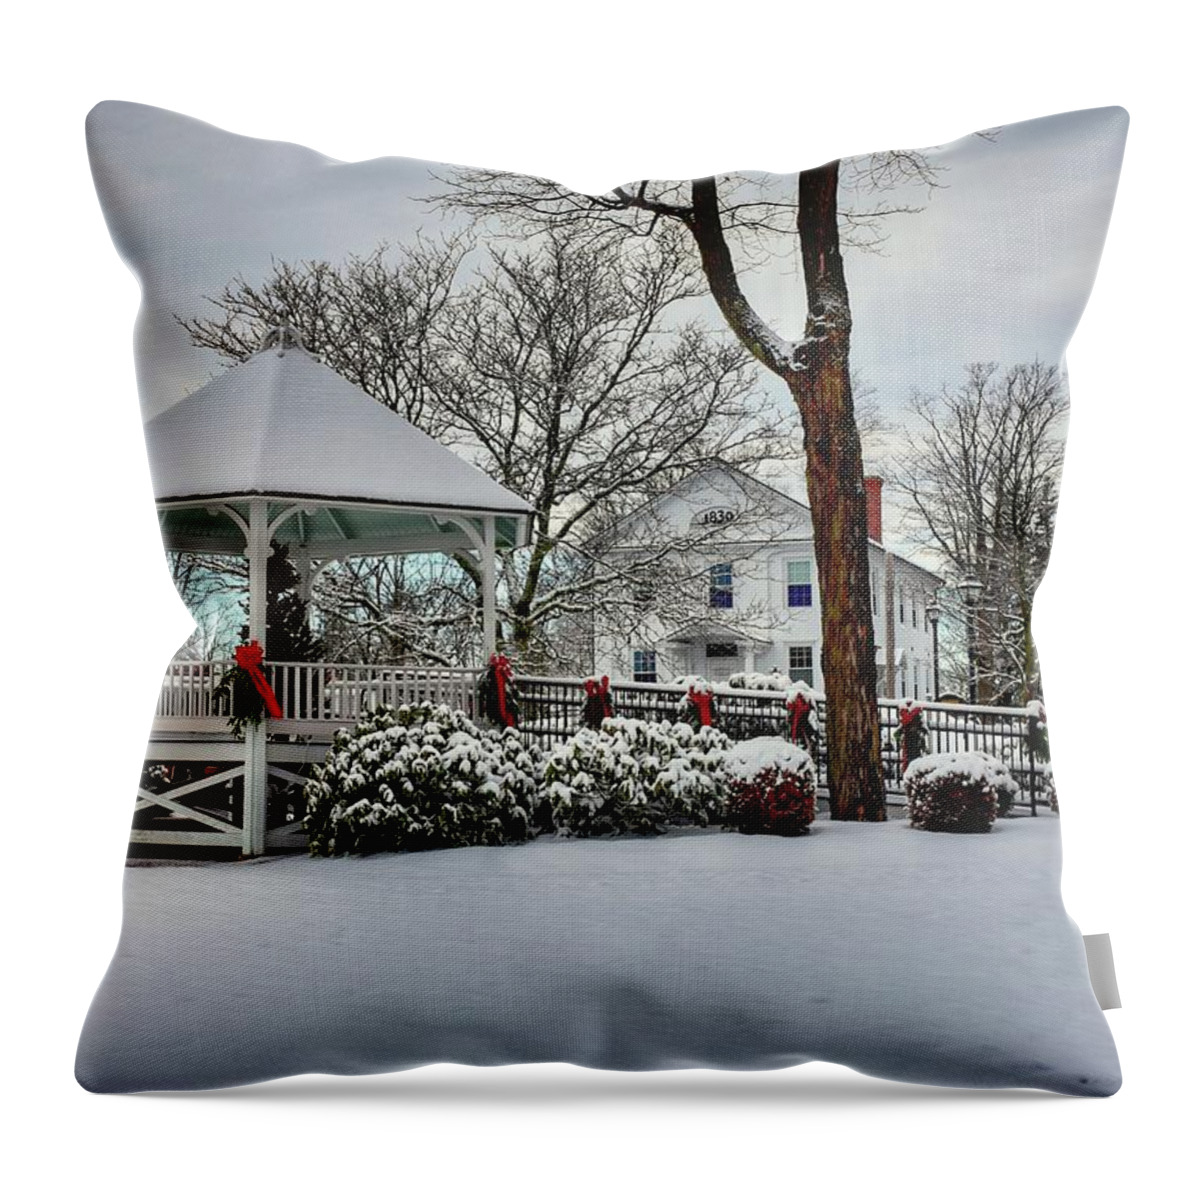 Shrewsbury Throw Pillow featuring the photograph Shrewsbury Town Common covered in snow by Monika Salvan